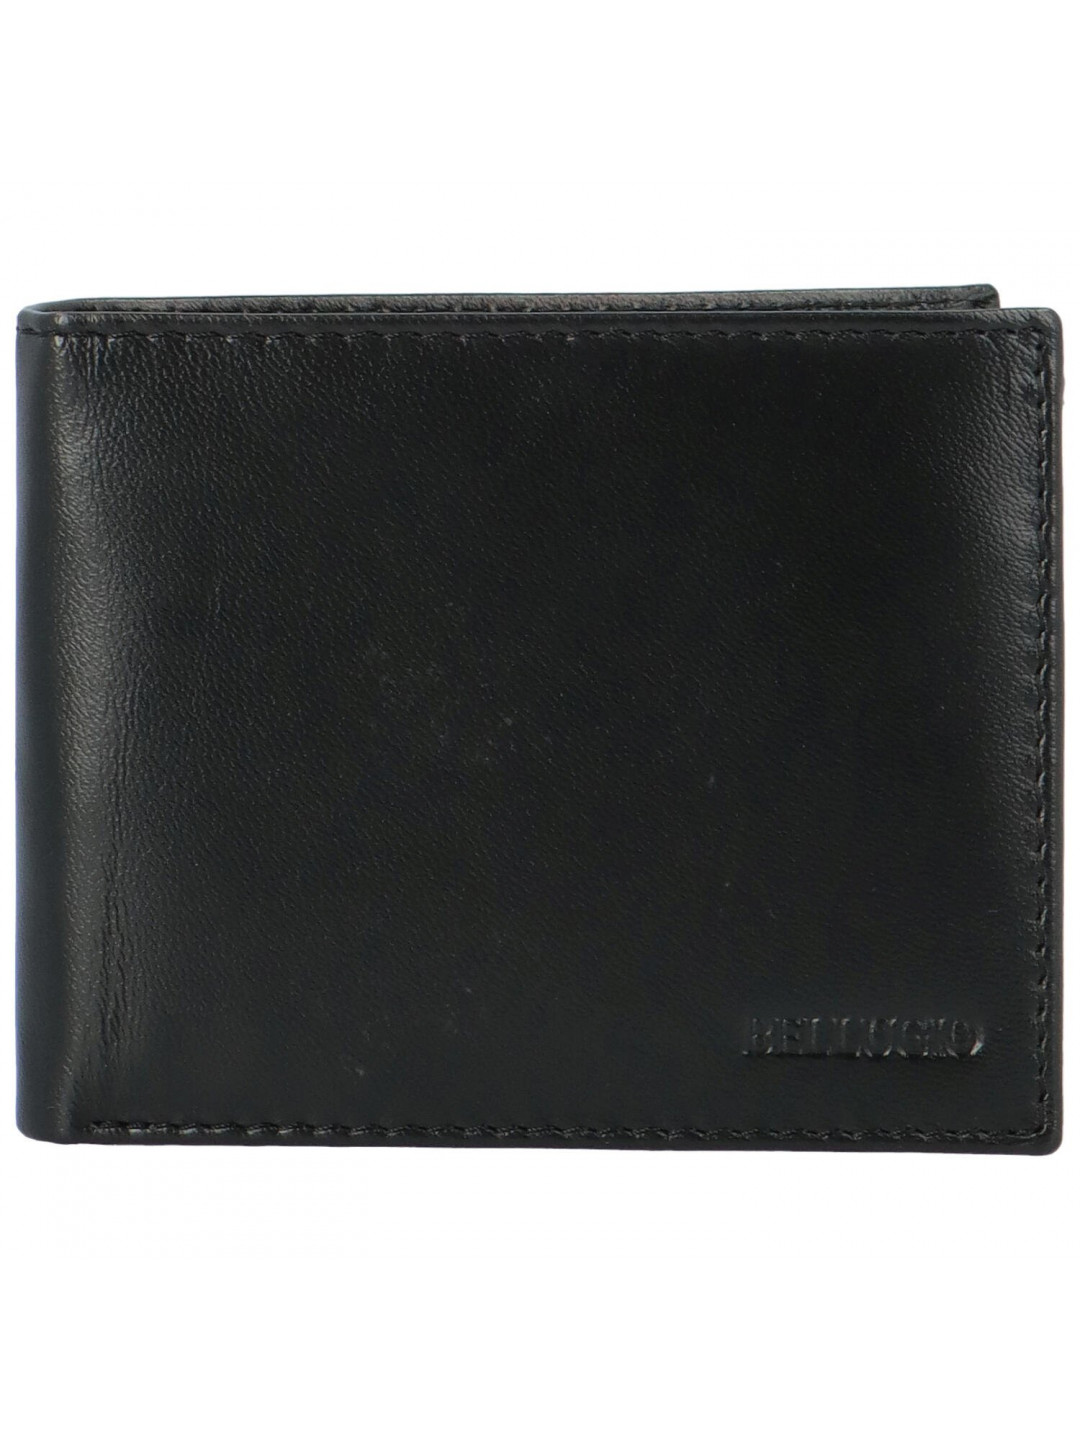 Pánská kožená peněženka černá – Bellugio Franko